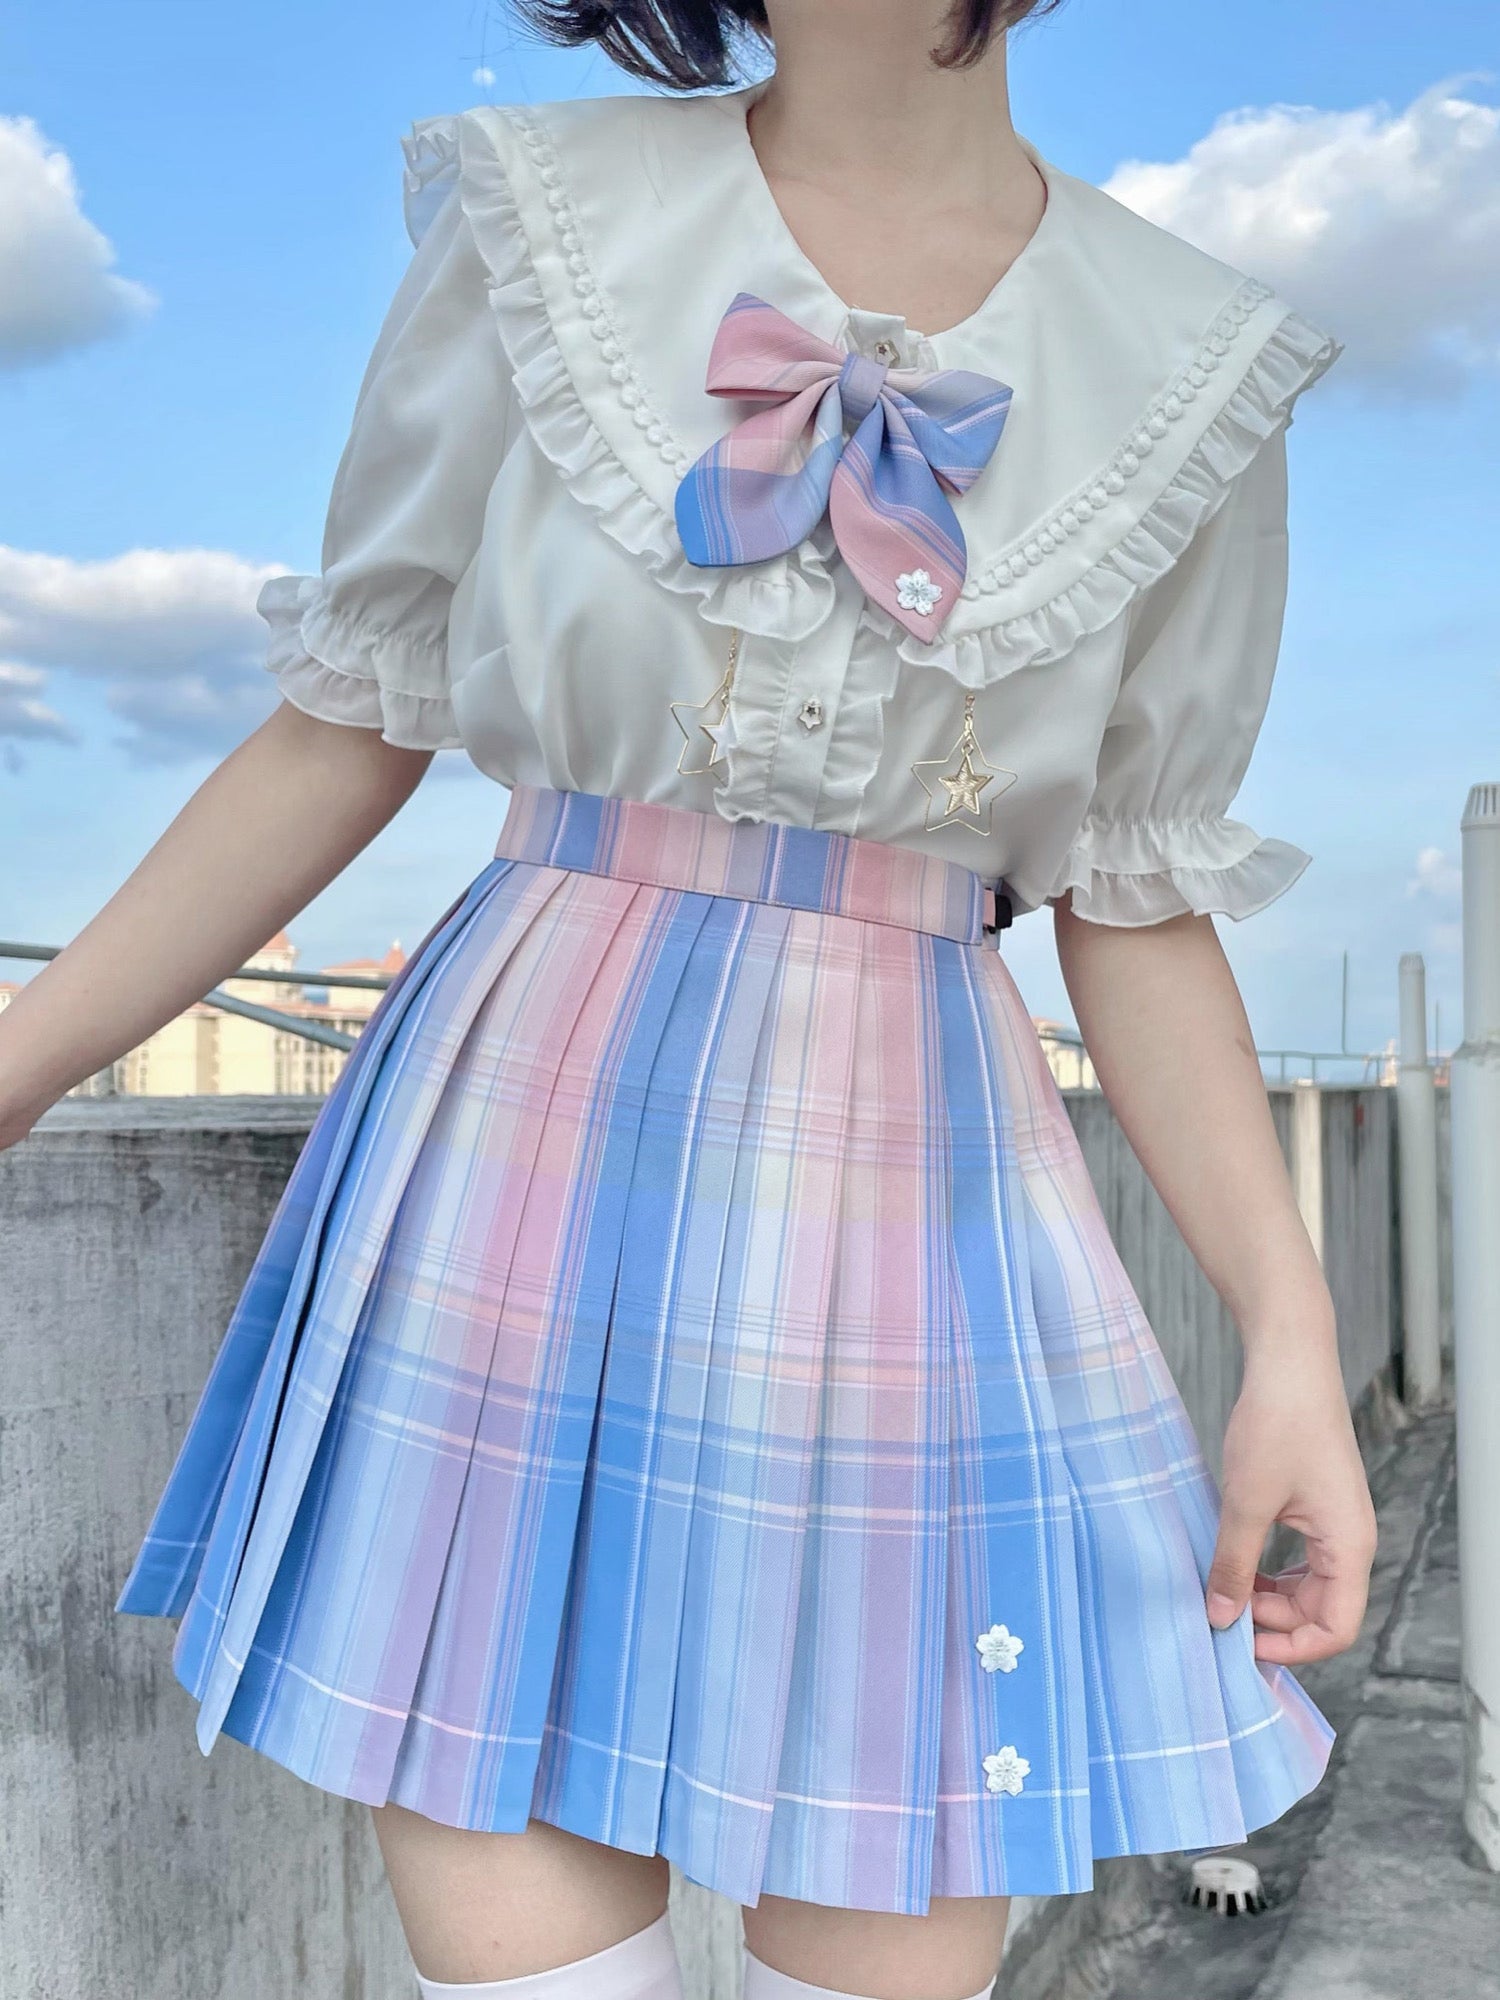 Sakura Lollipop JK Uniform Accessories-ntbhshop